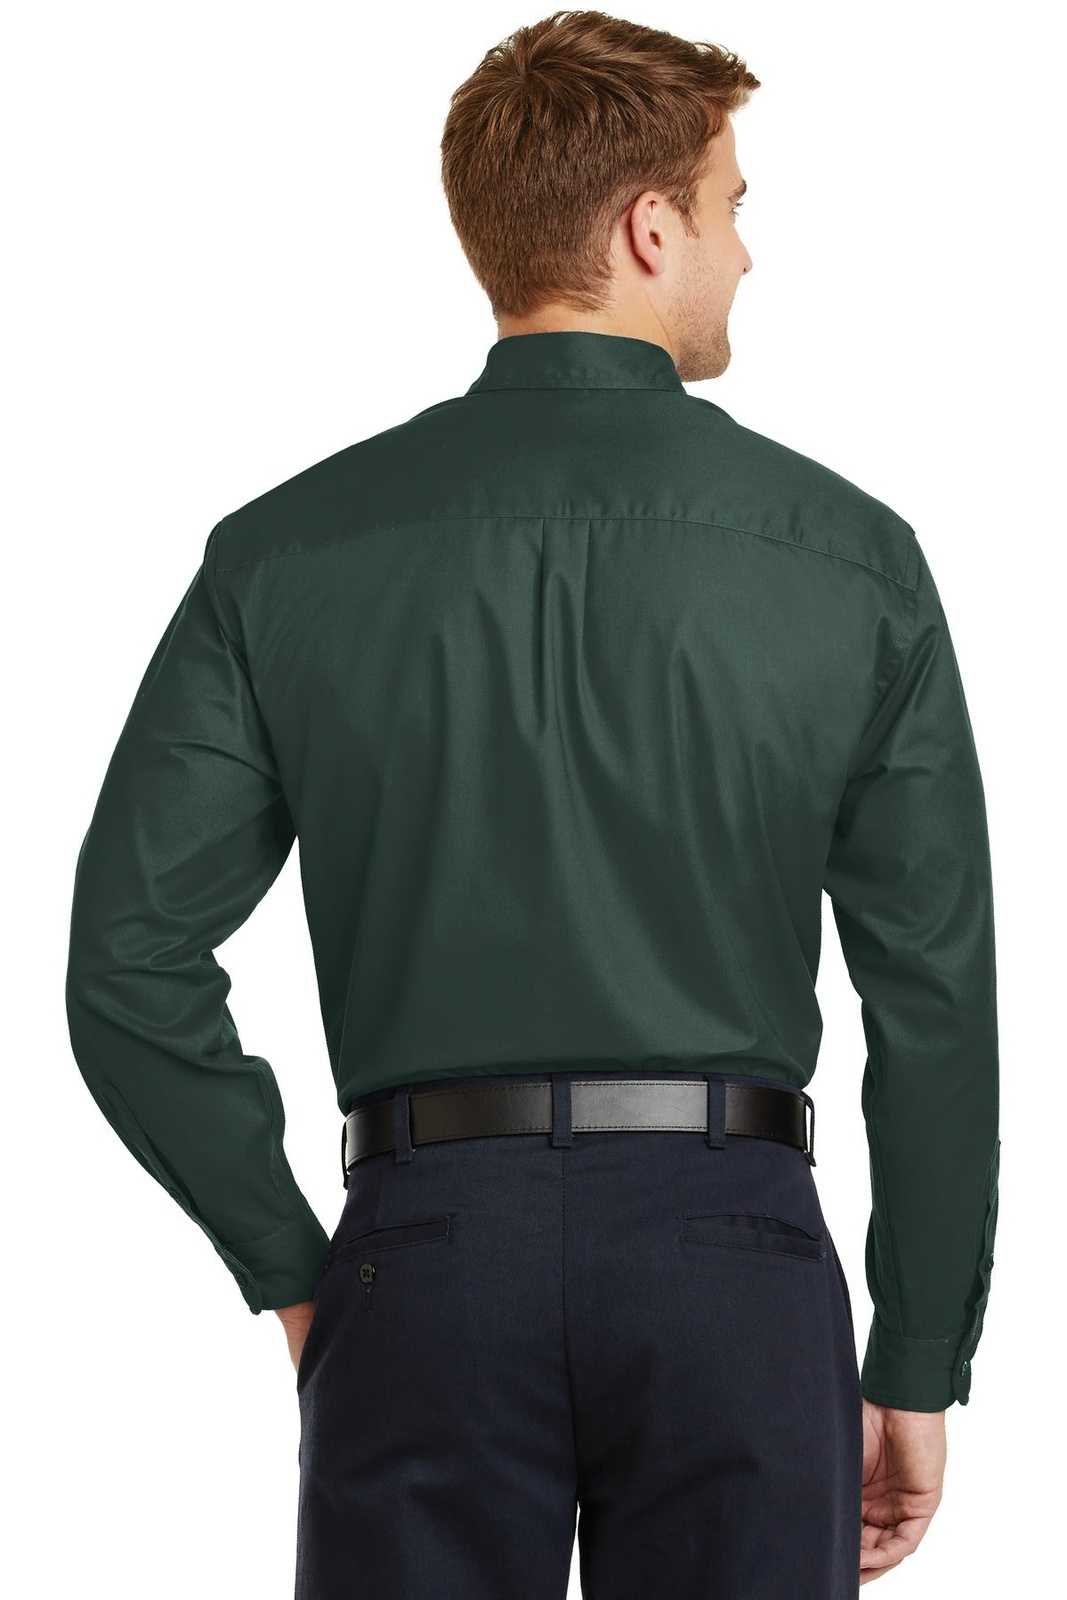 CornerStone SP17 Long Sleeve Superpro Twill Shirt - Dark Green - HIT a Double - 1